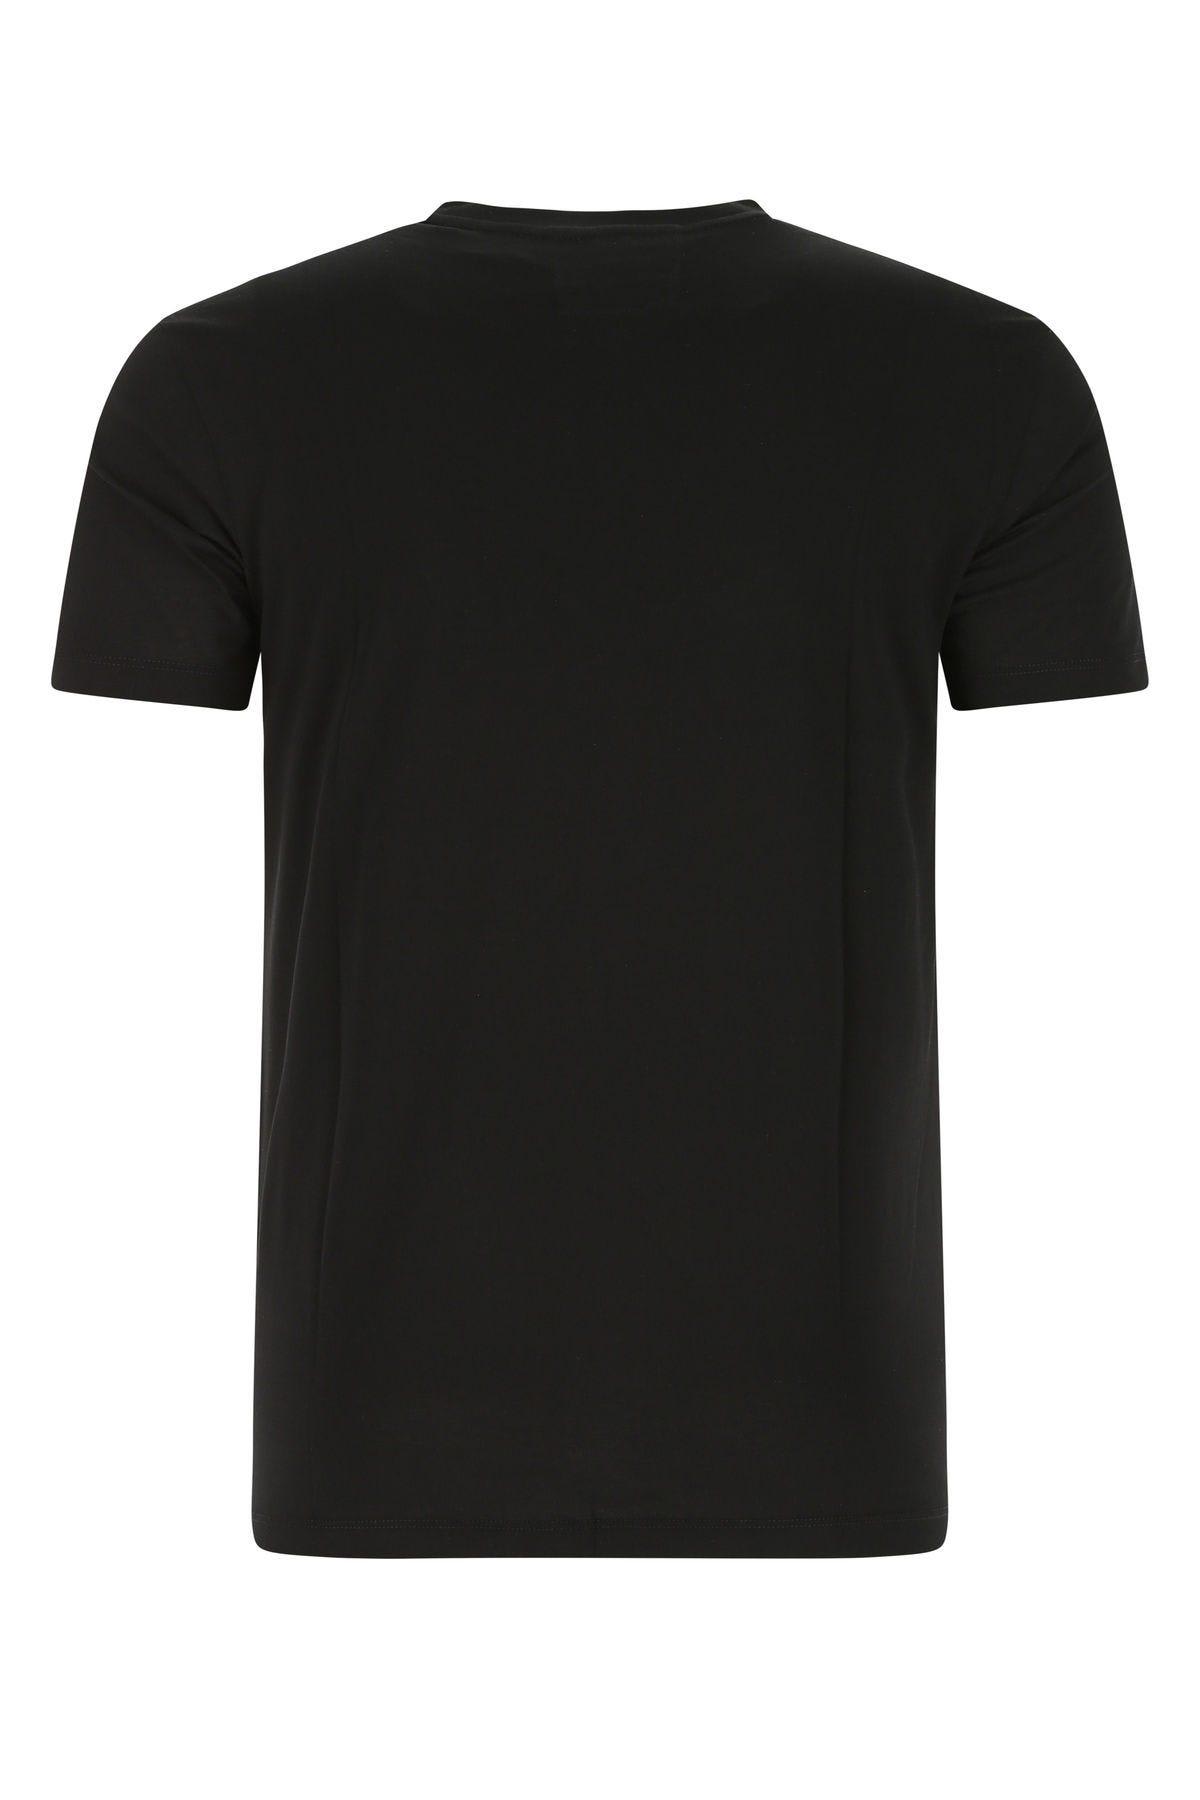 Shop Emporio Armani Black Cotton T-shirt